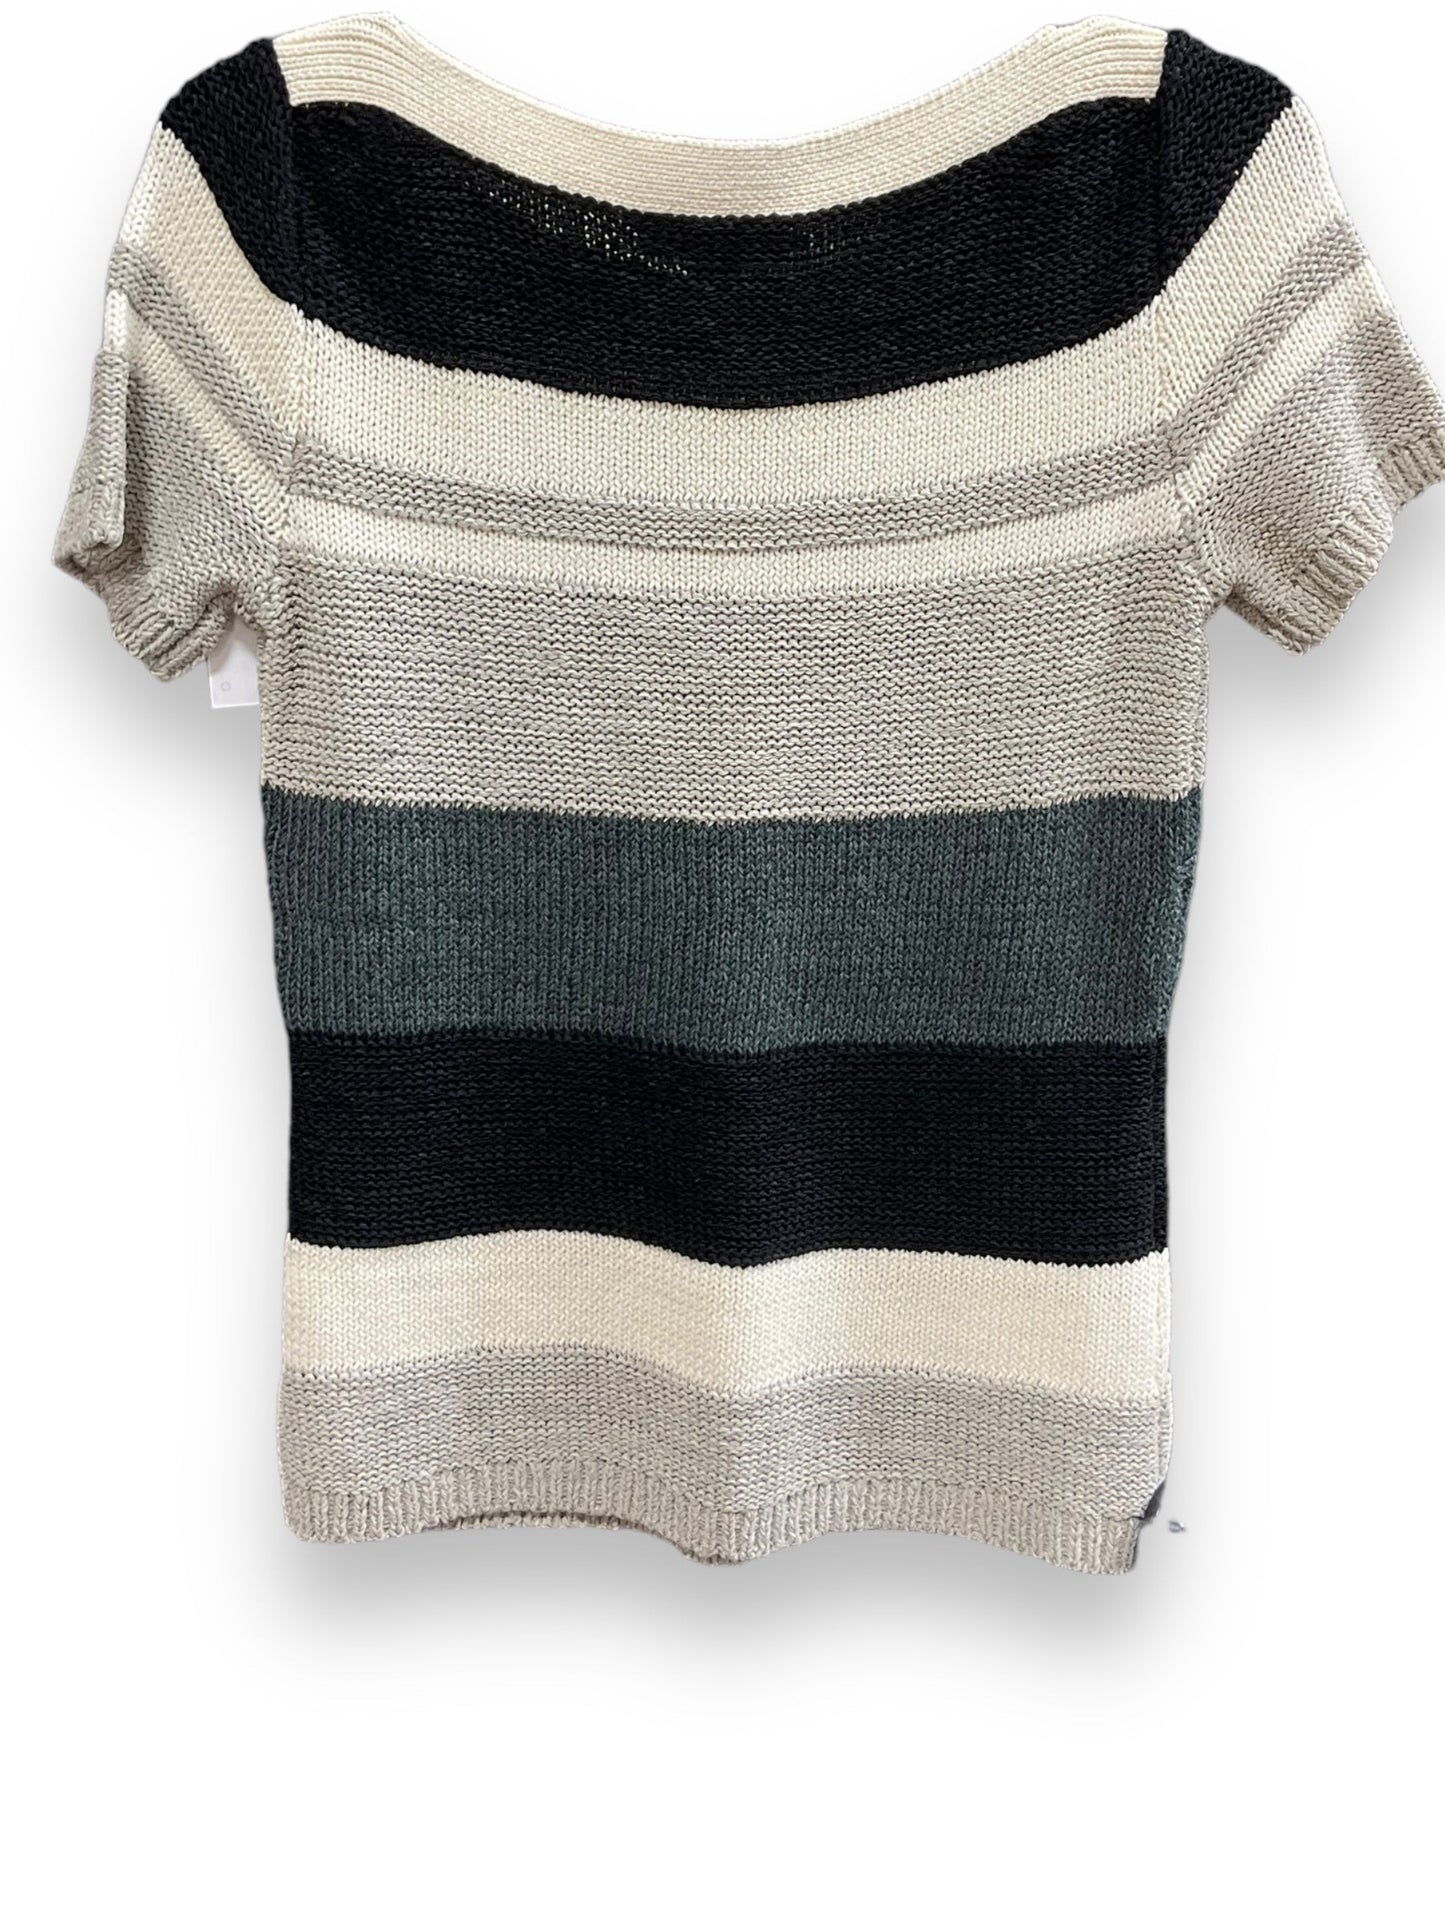 Black & White Sweater Short Sleeve Ann Taylor, Size S